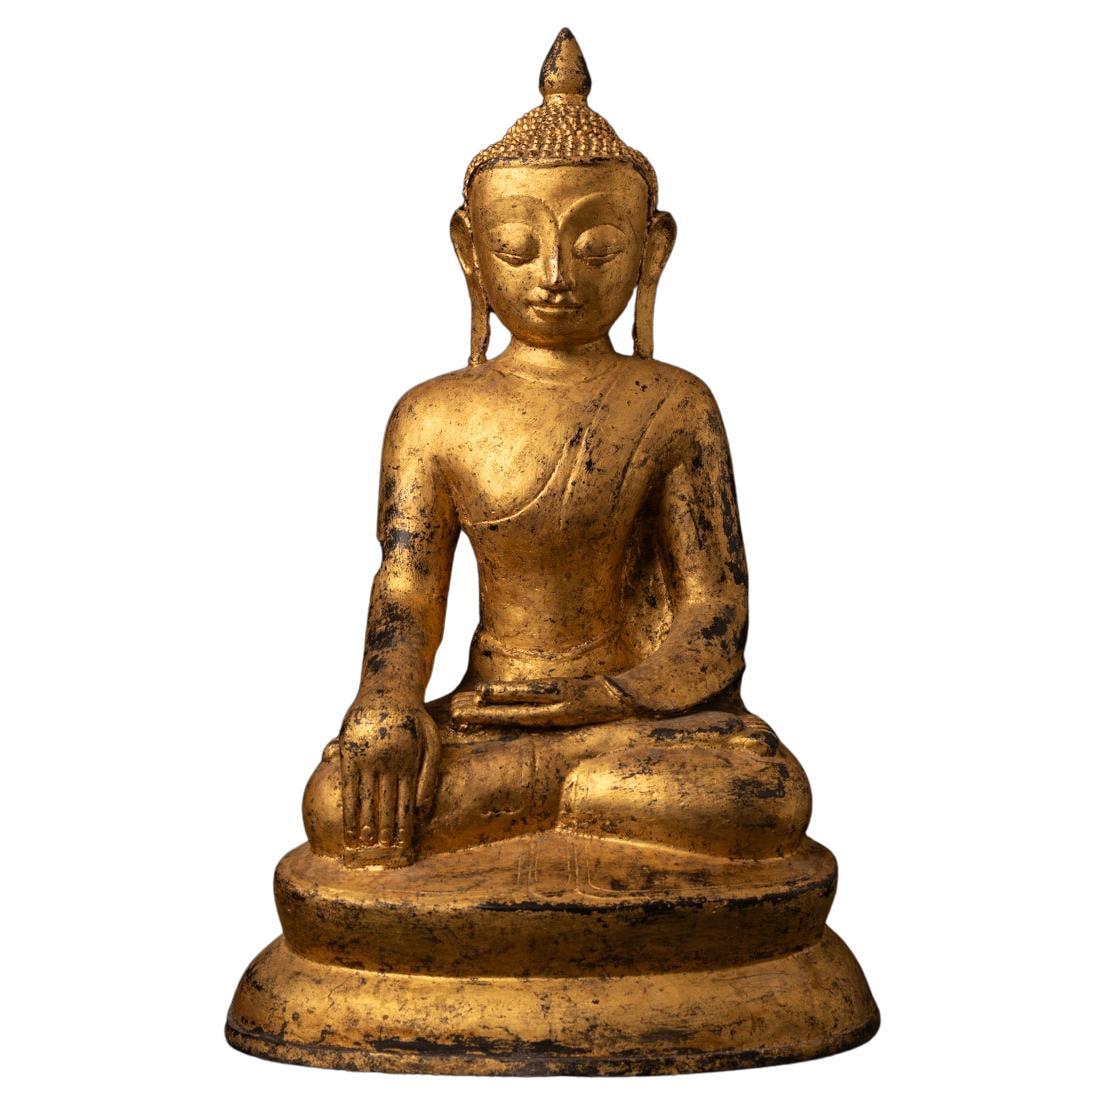 18th century Special antique bronze Burmese Buddha from Burma